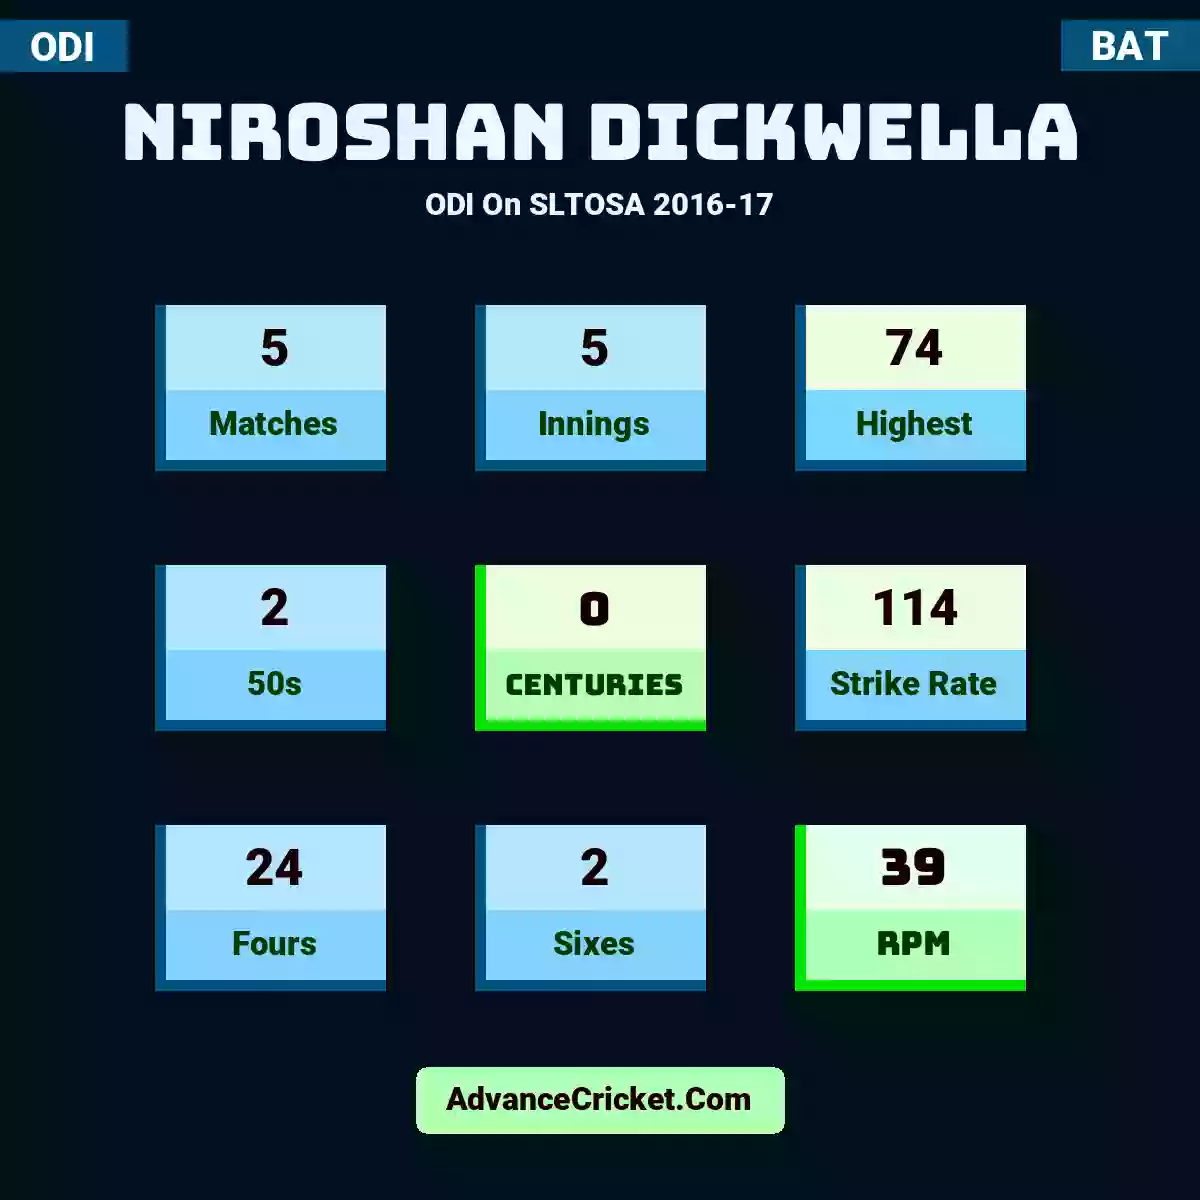 Niroshan Dickwella ODI  On SLTOSA 2016-17, Niroshan Dickwella played 5 matches, scored 74 runs as highest, 2 half-centuries, and 0 centuries, with a strike rate of 114. N.Dickwella hit 24 fours and 2 sixes, with an RPM of 39.